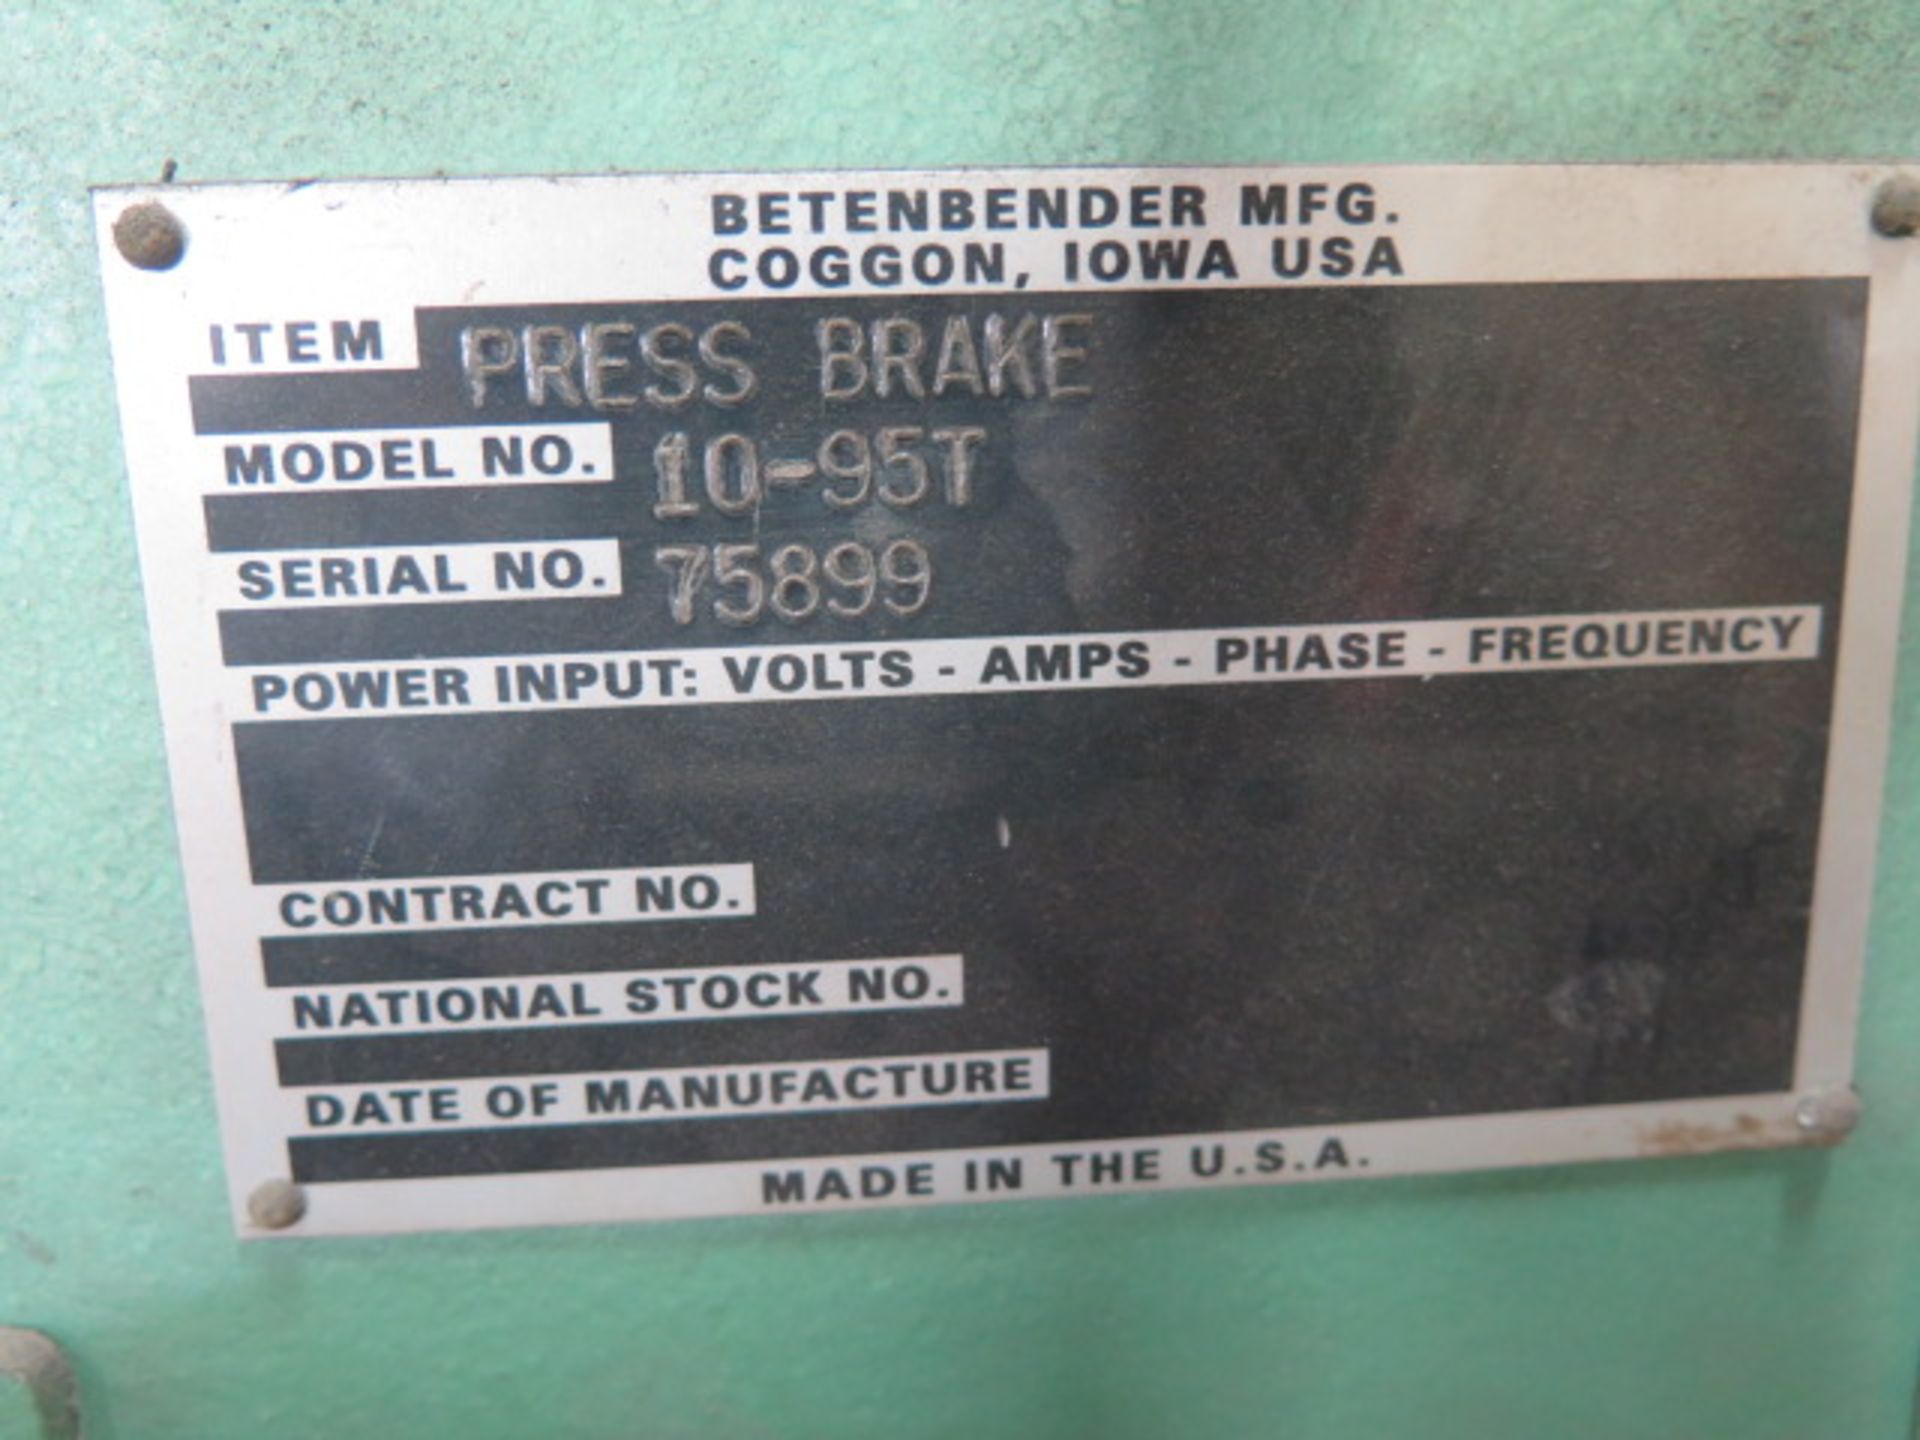 Betenbender 10-95T 95 Ton x 10’ Hydraulic Press Brake s/n 75899 w/ Back Gauge Control, SOLD AS IS - Image 13 of 13